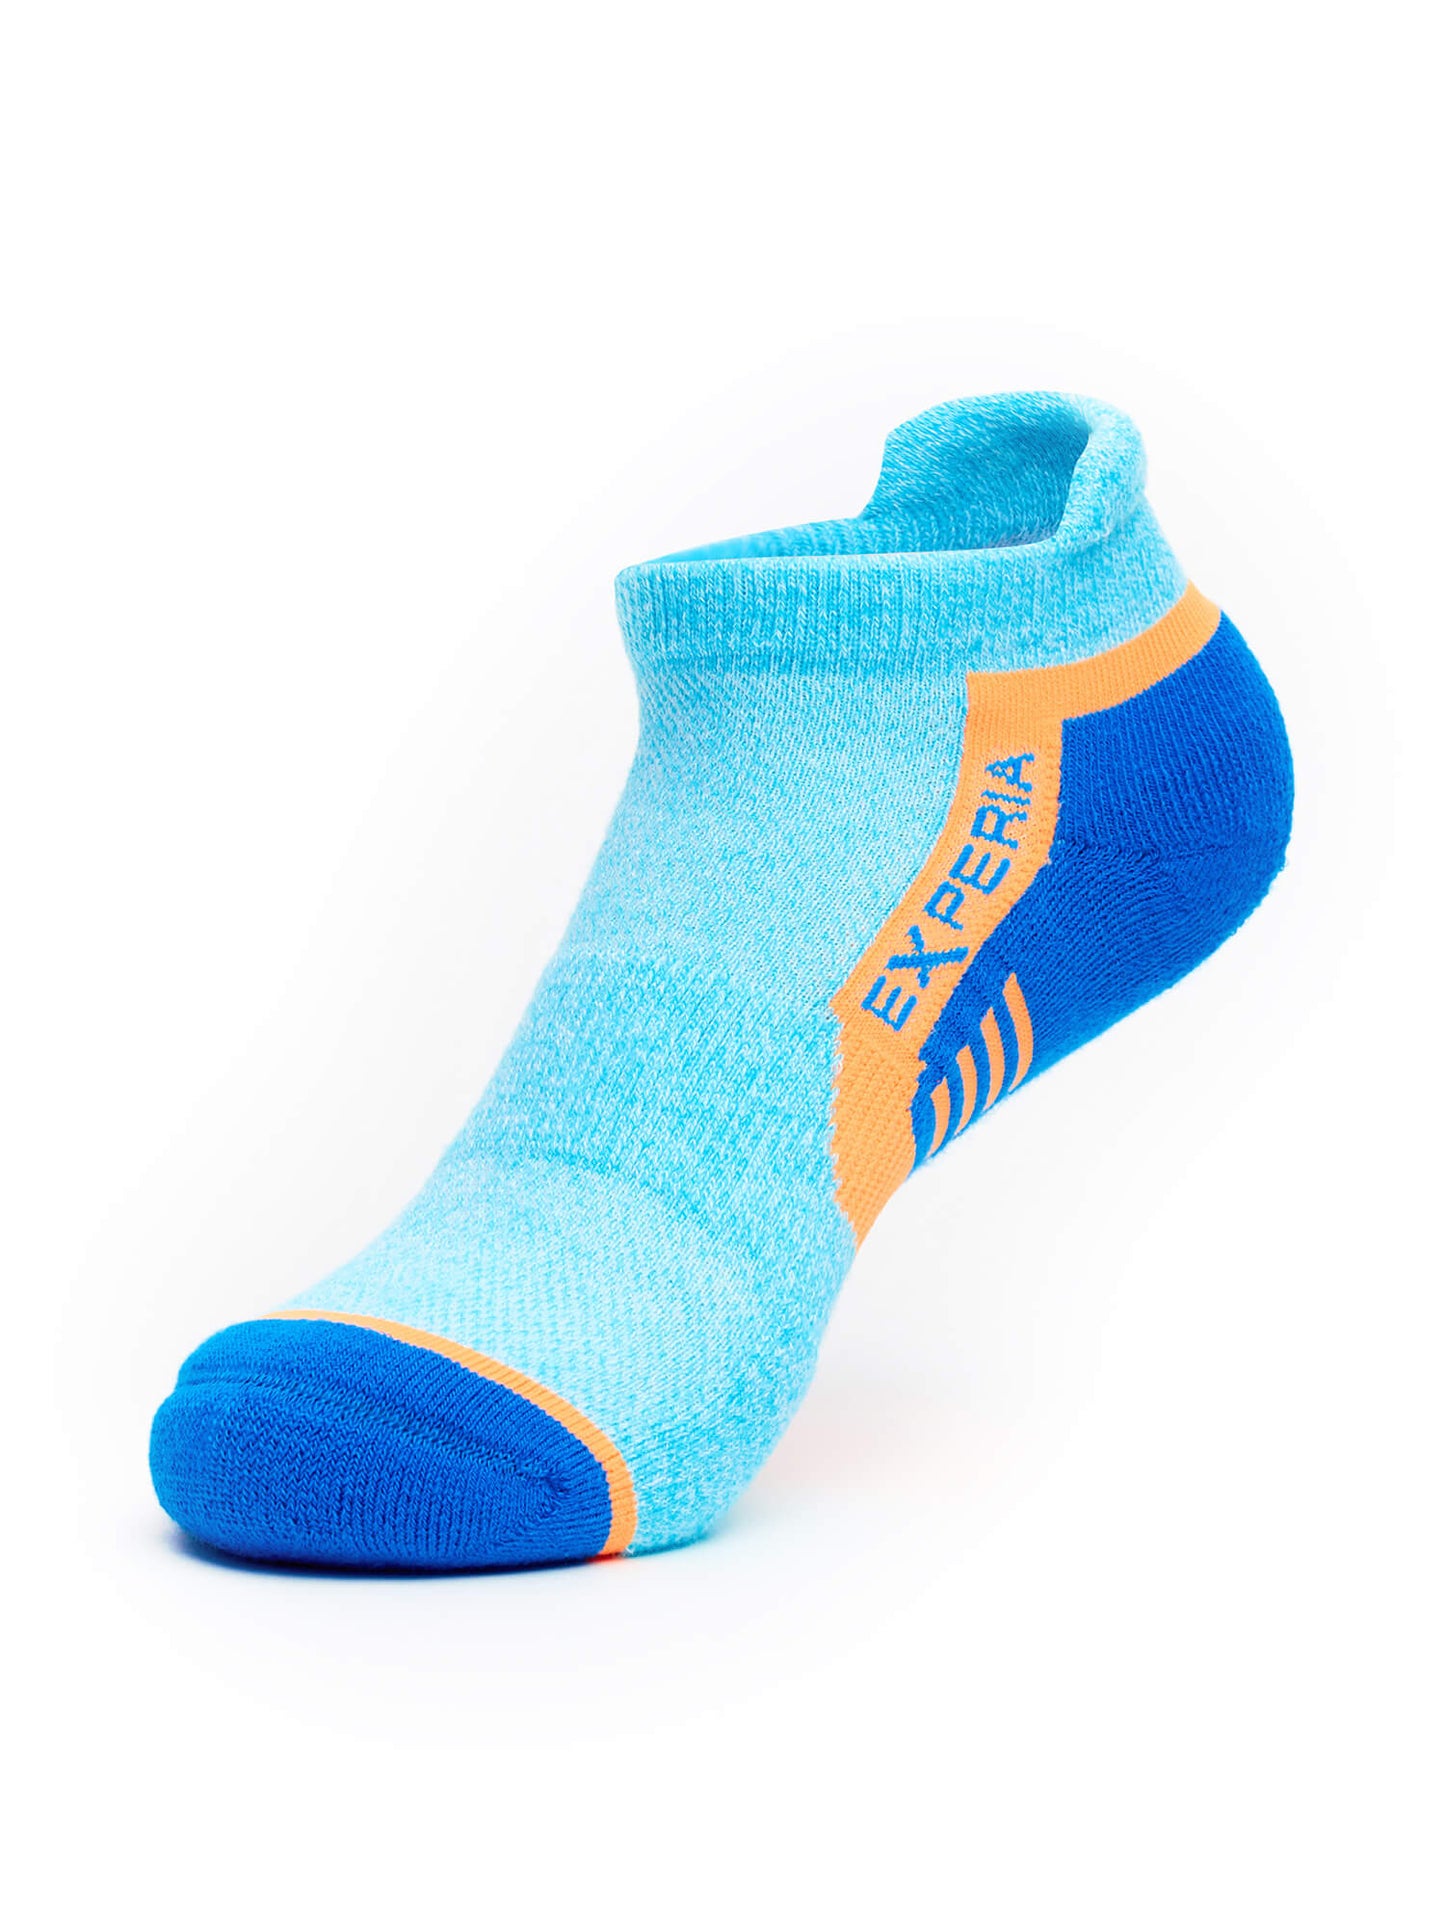 Side of Thorlos Experia Repreve Low Cut Socks in Blue